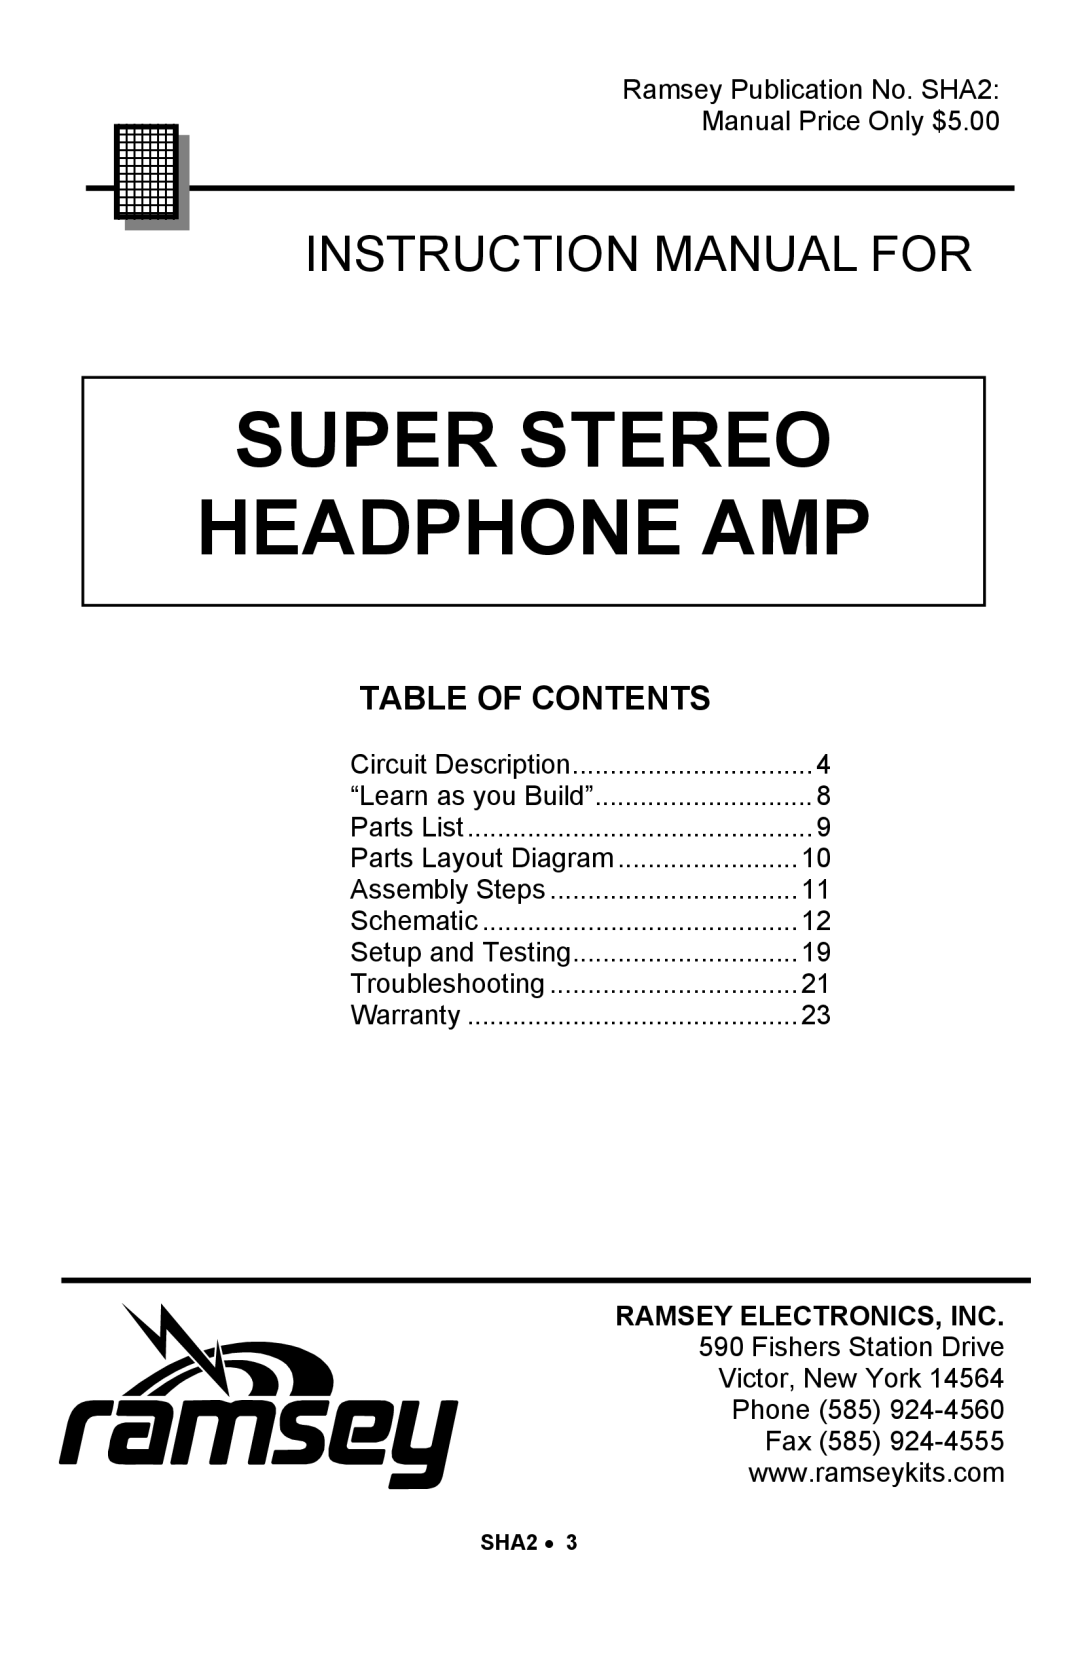 Ramsey Electronics SHA2 manual Super Stereo Headphone AMP 